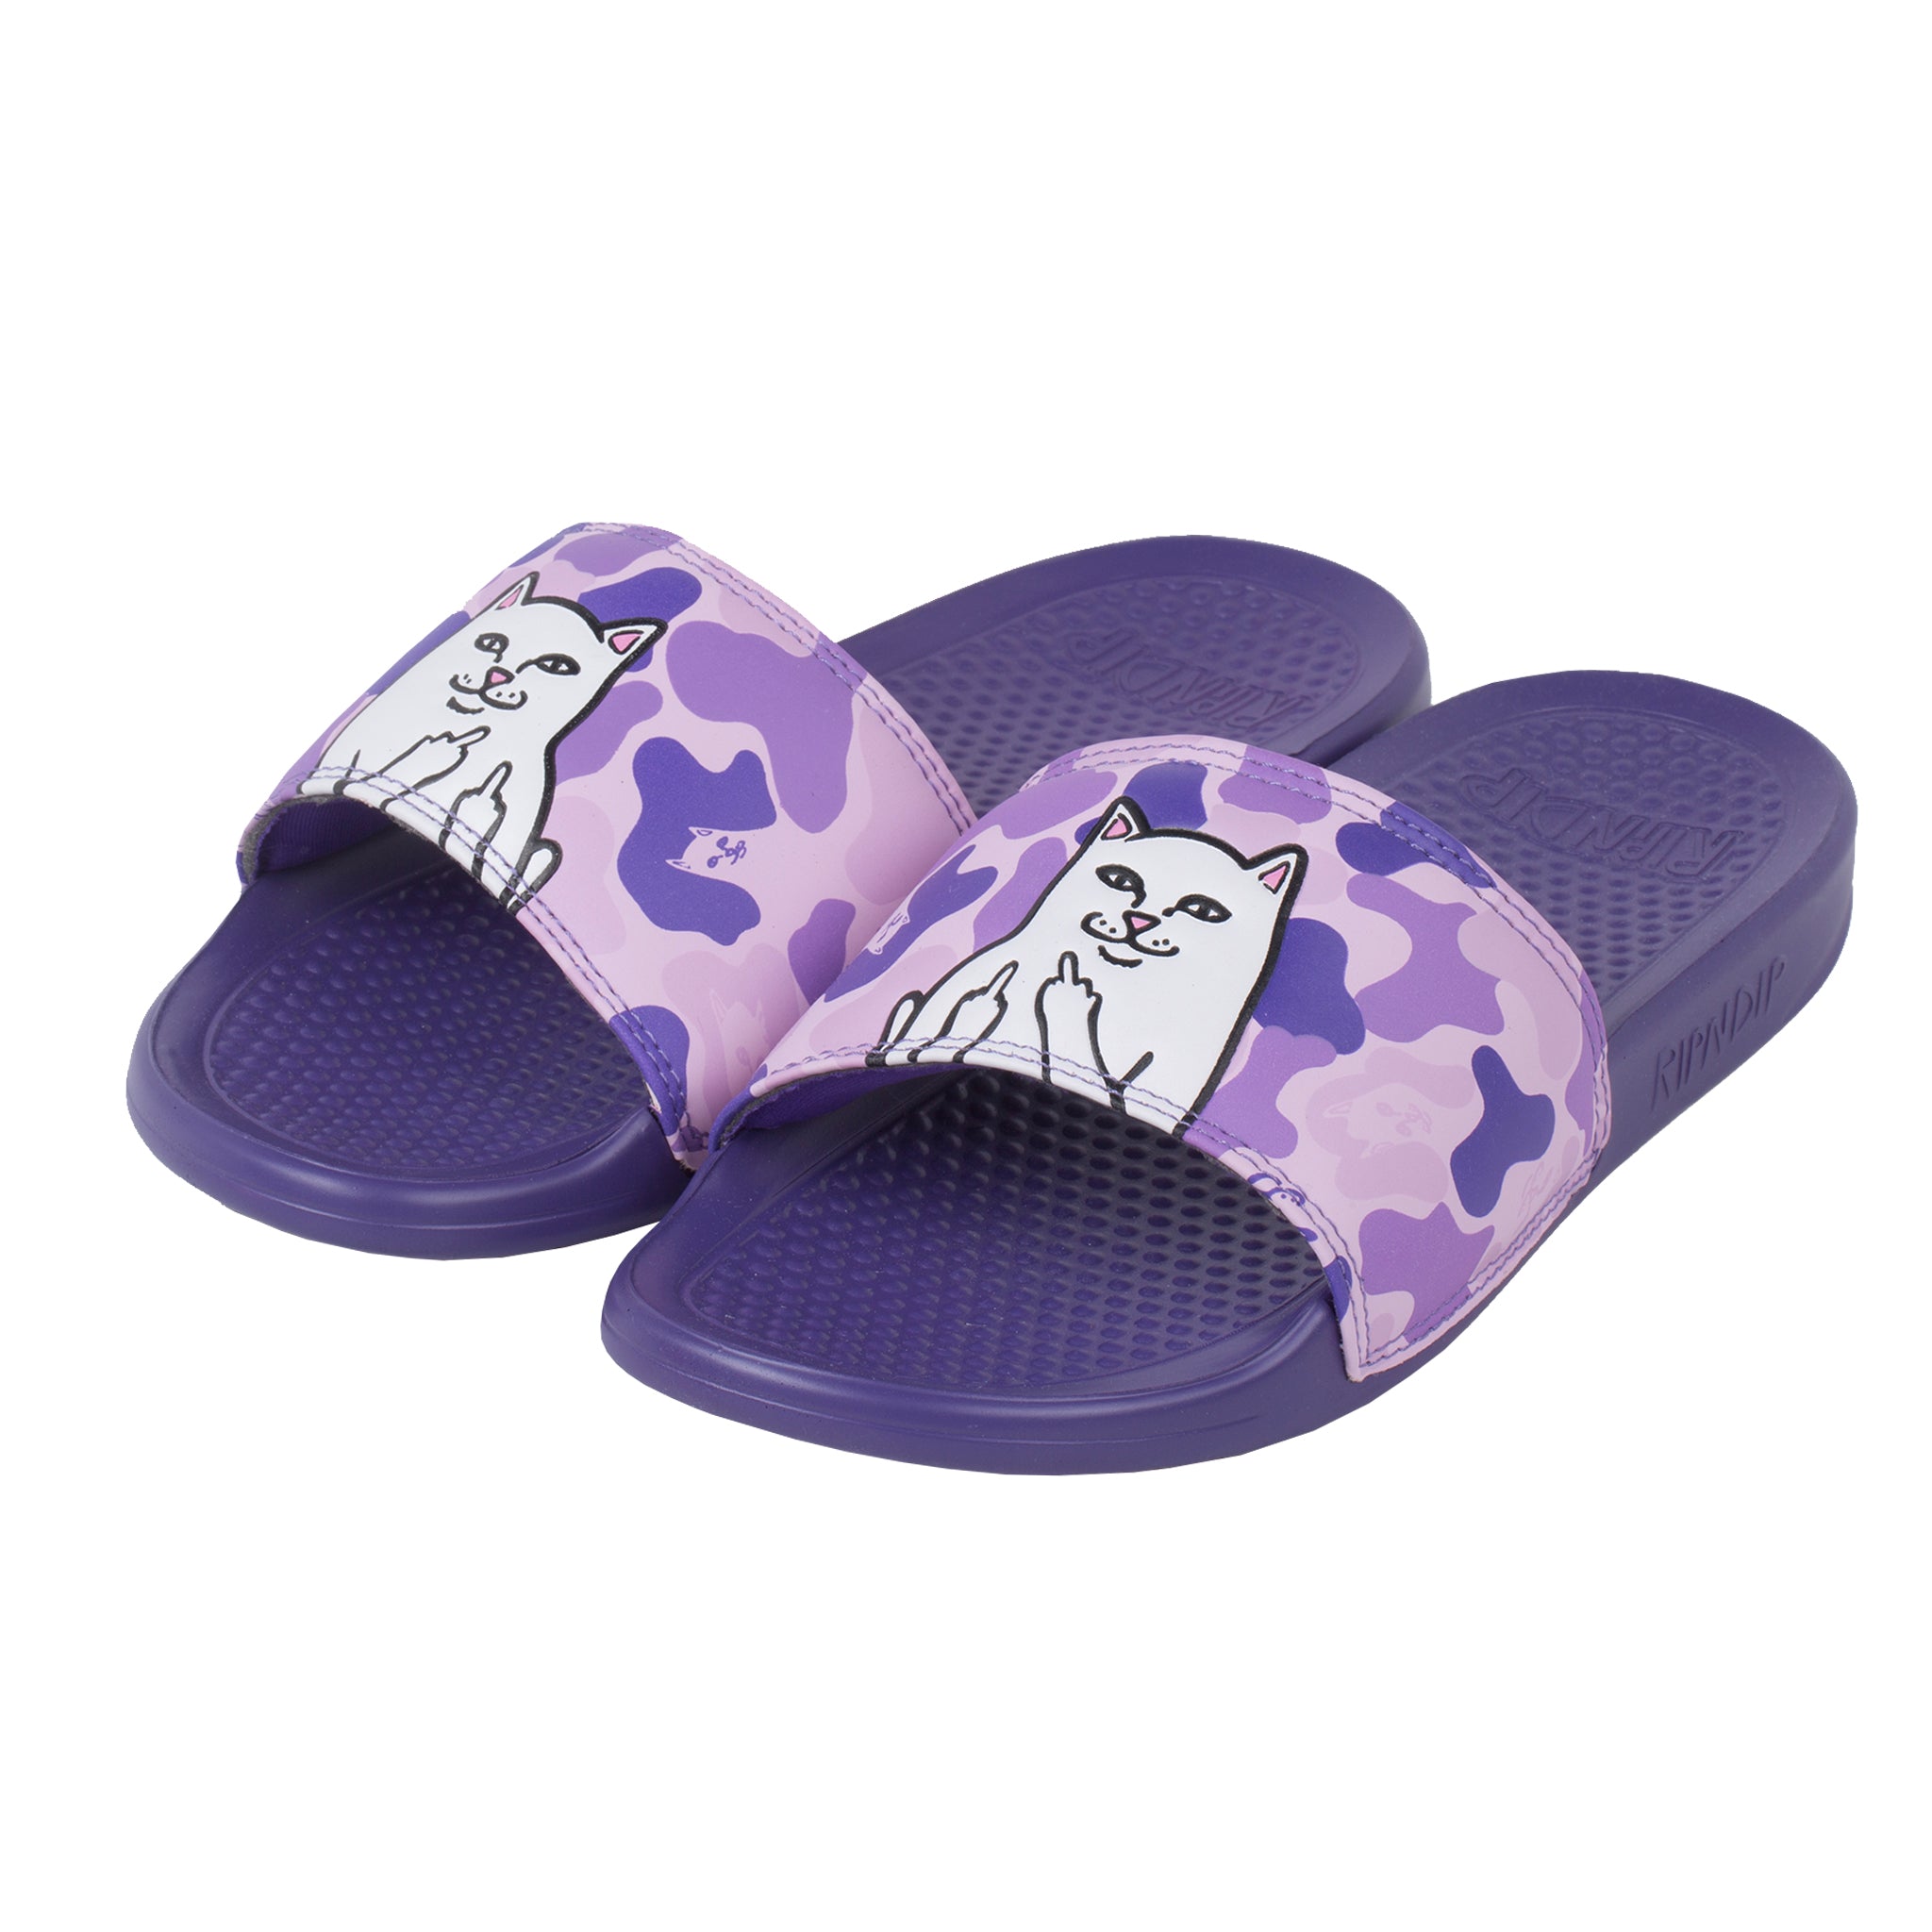 ripndip purple camo slides